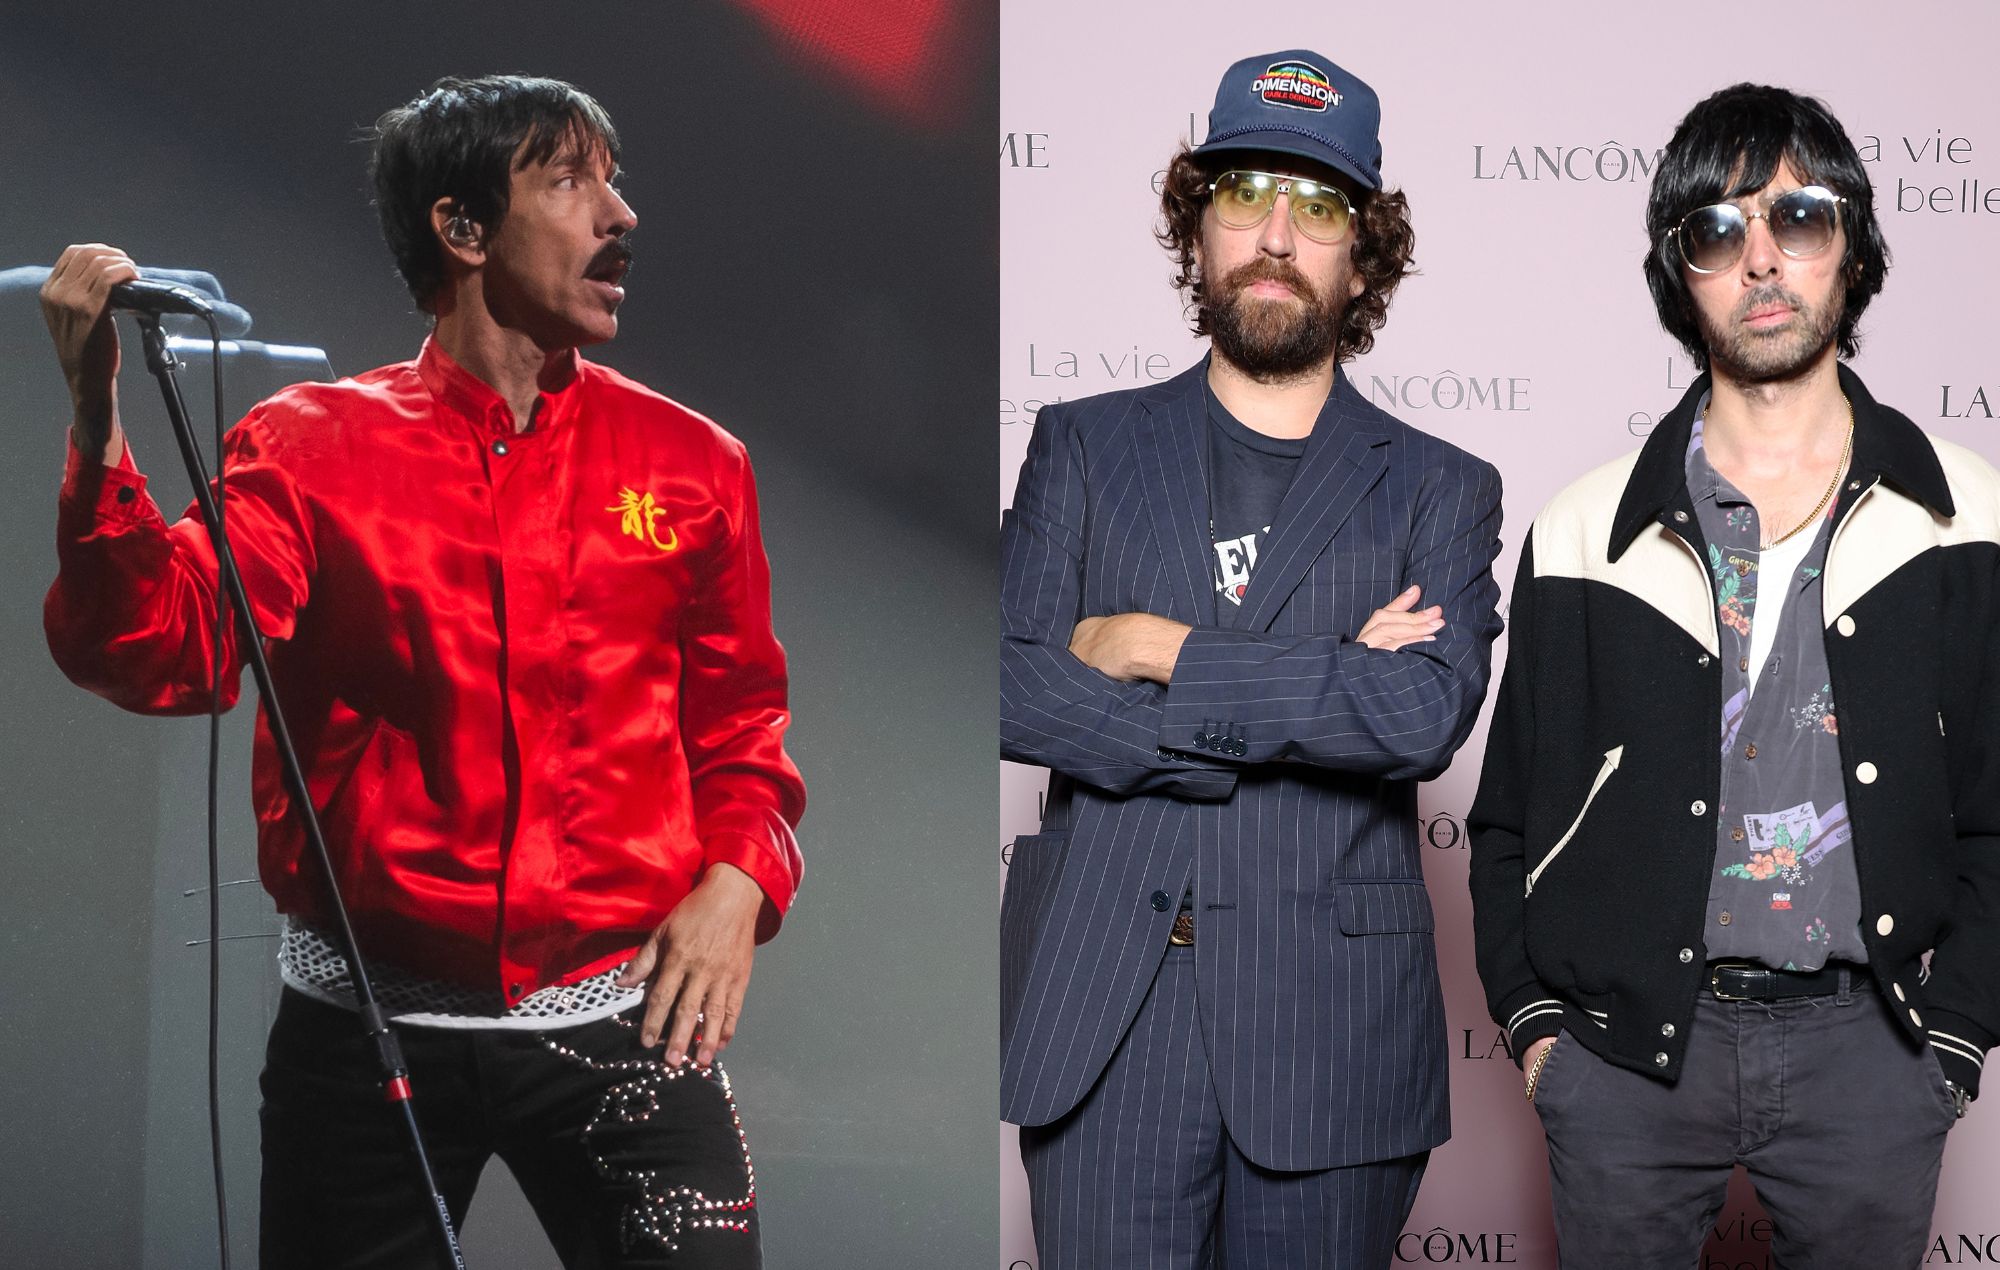 Justice se pronuncia sobre un meme "muy vergonzoso" en el que cantaban 'Under The Bridge' de Red Hot Chili Peppers a Anthony Kiedis 